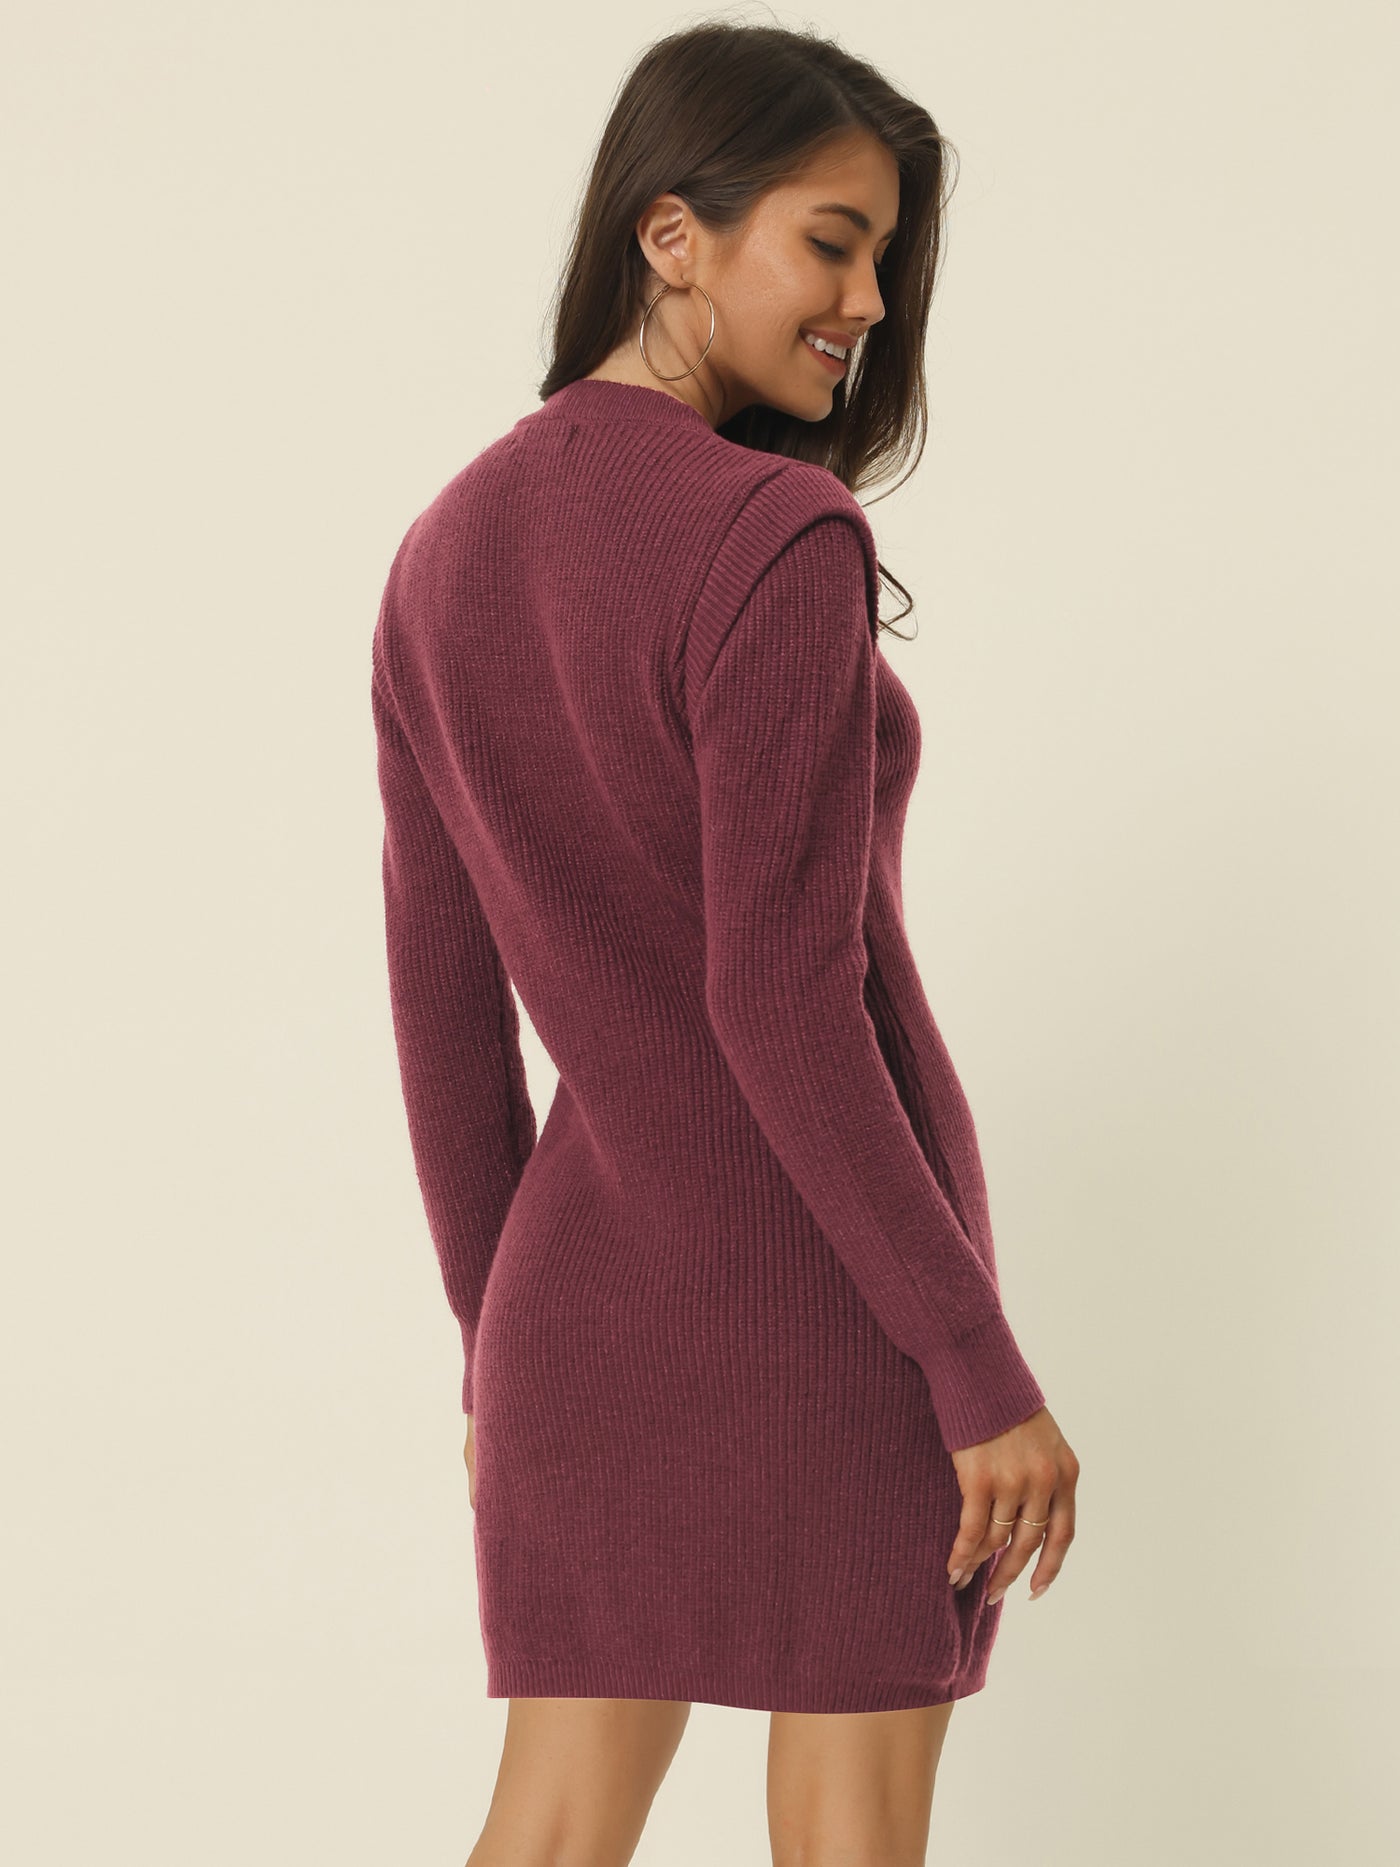 Bublédon Womens' Round Neck Long Sleeve Slim Fit Casual Fall Winter Mini Sweater Dress